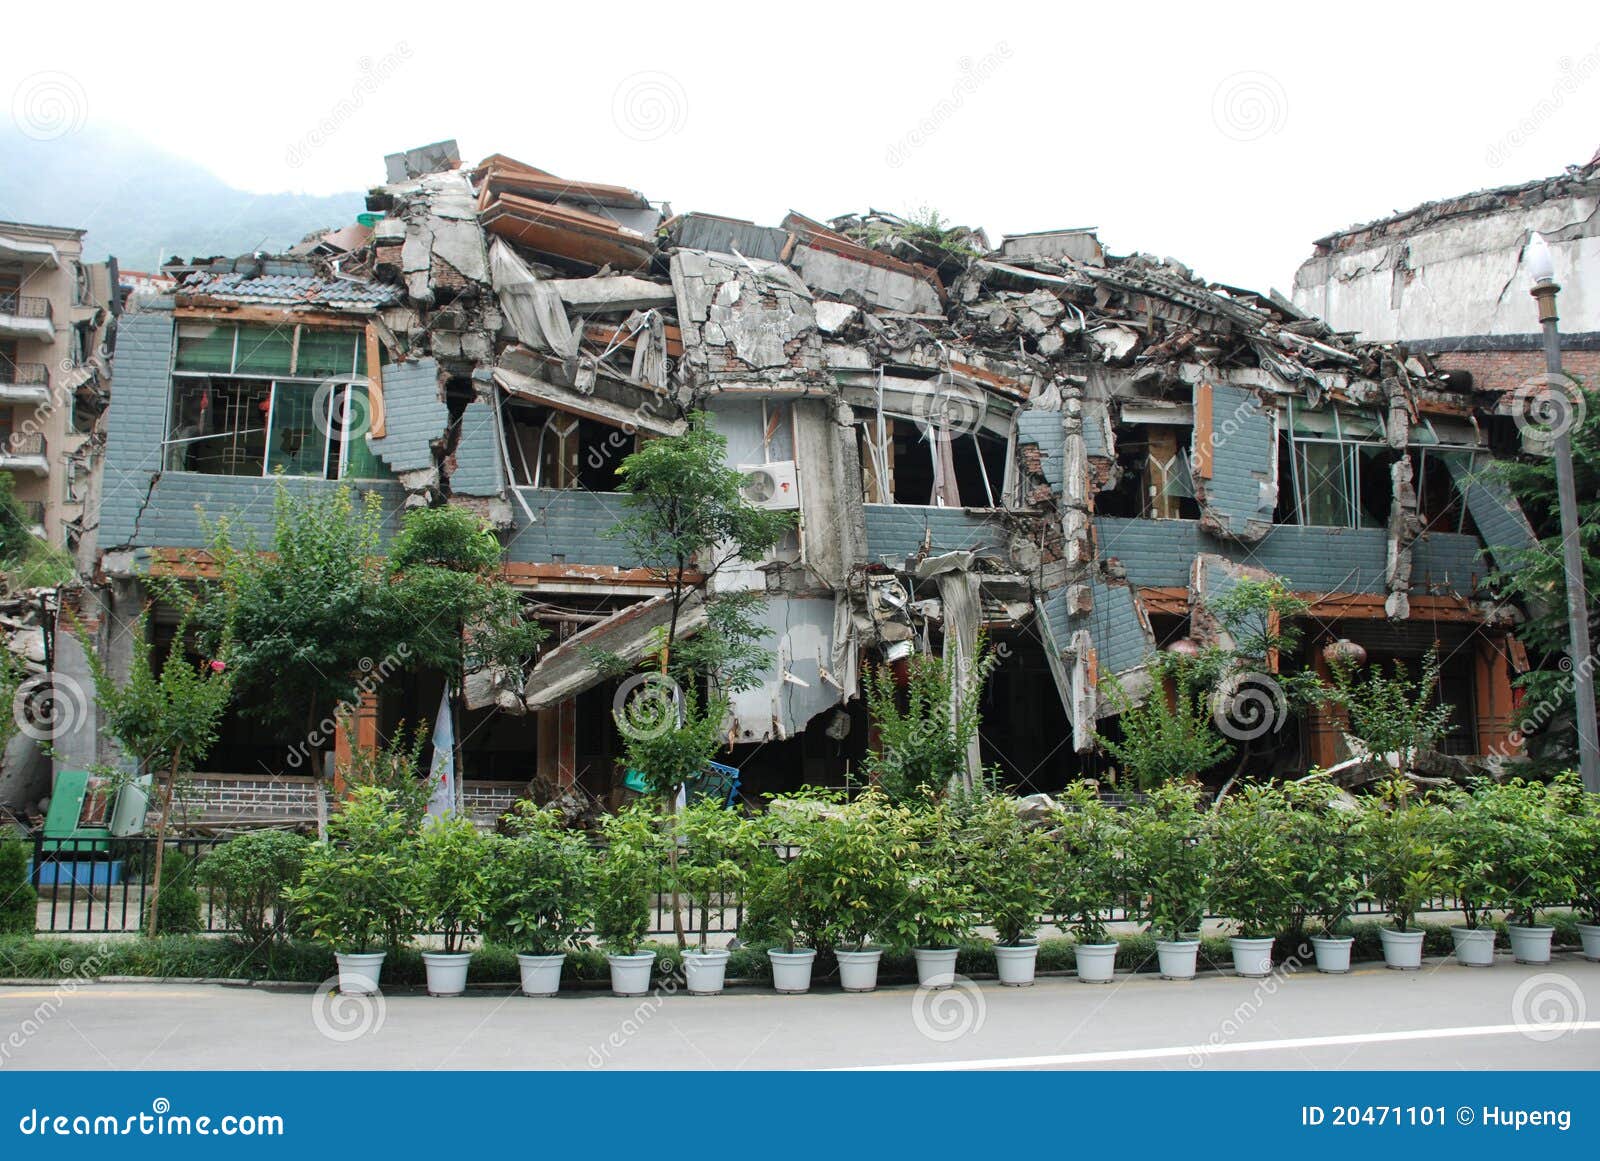 2008 512 Wenchuan Earthquake Editorial Photo - Image: 204711011300 x 960